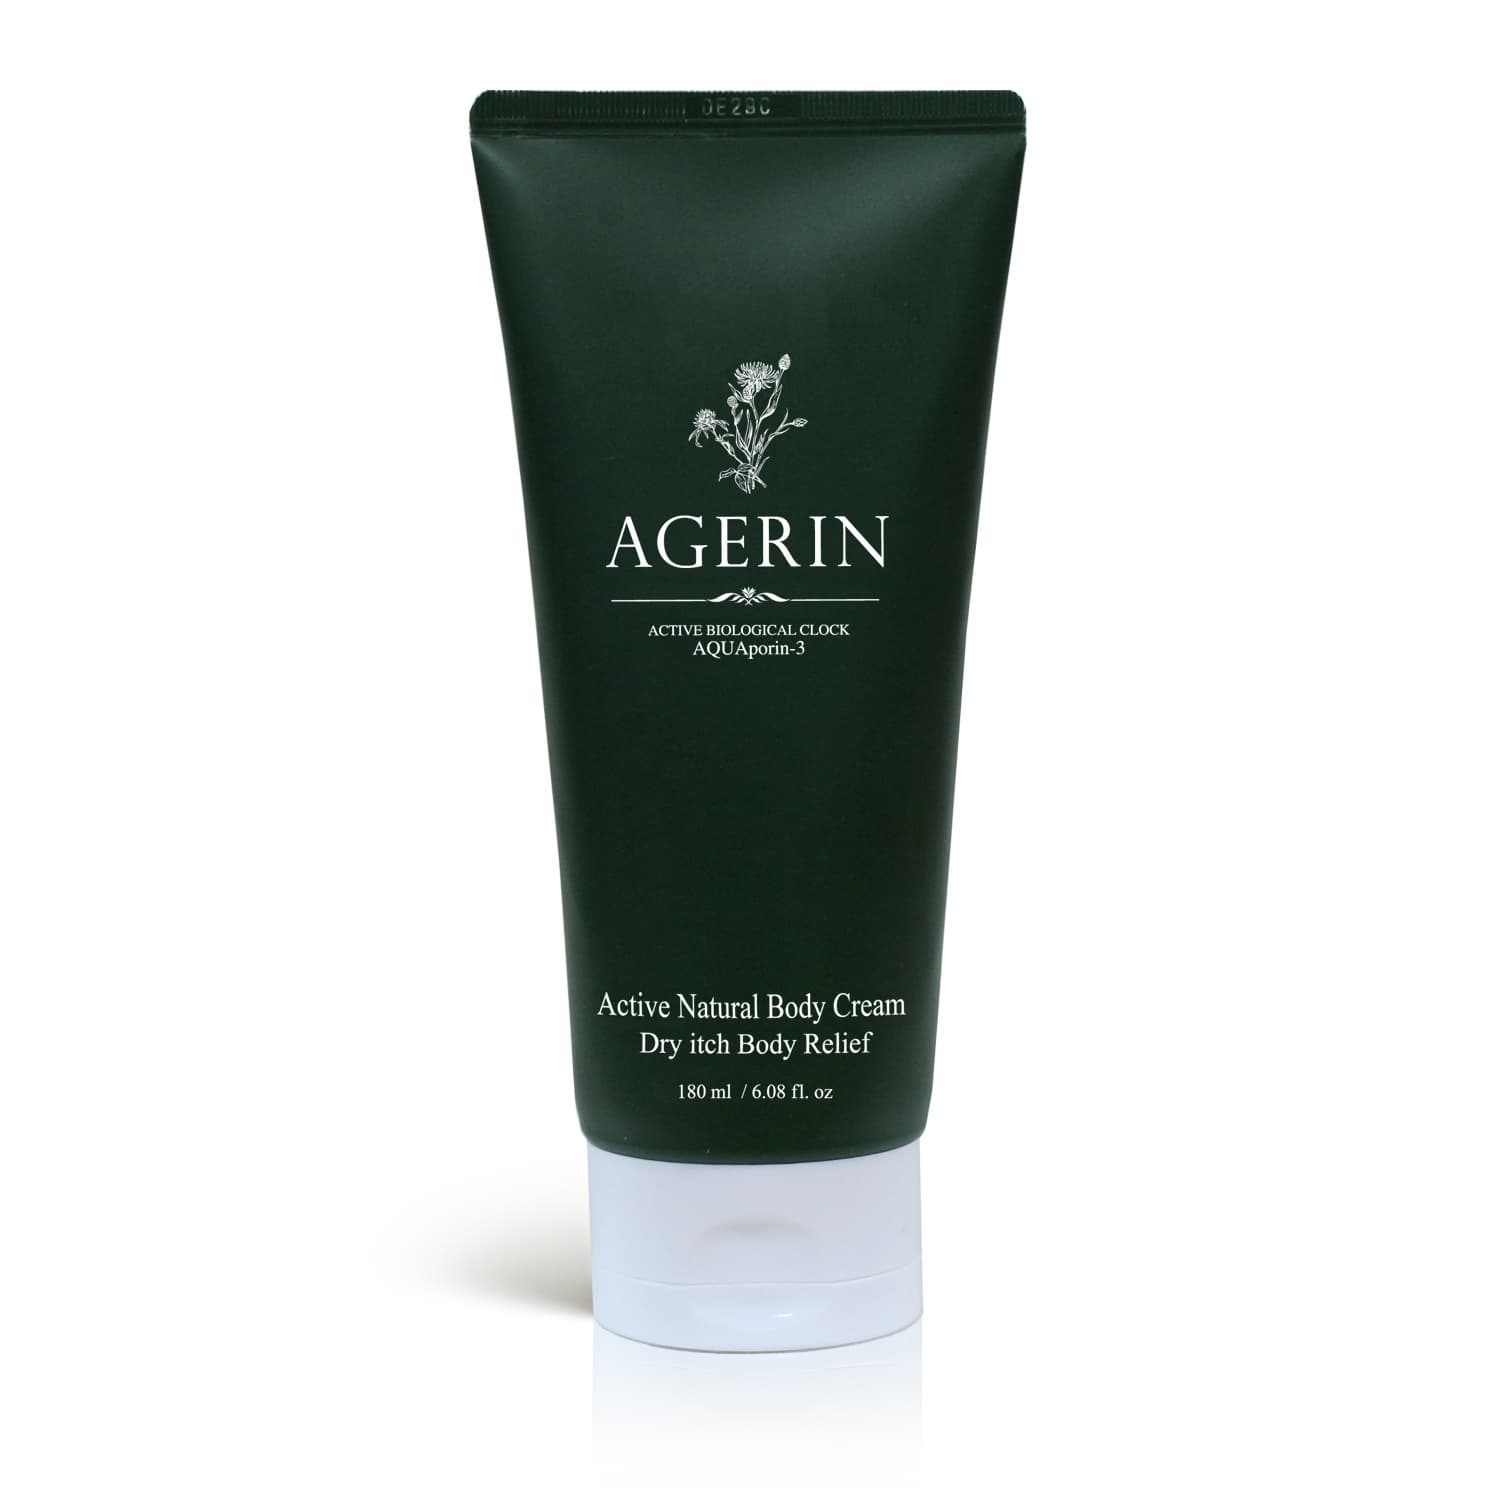 AGERIN Active Natural Body Cream